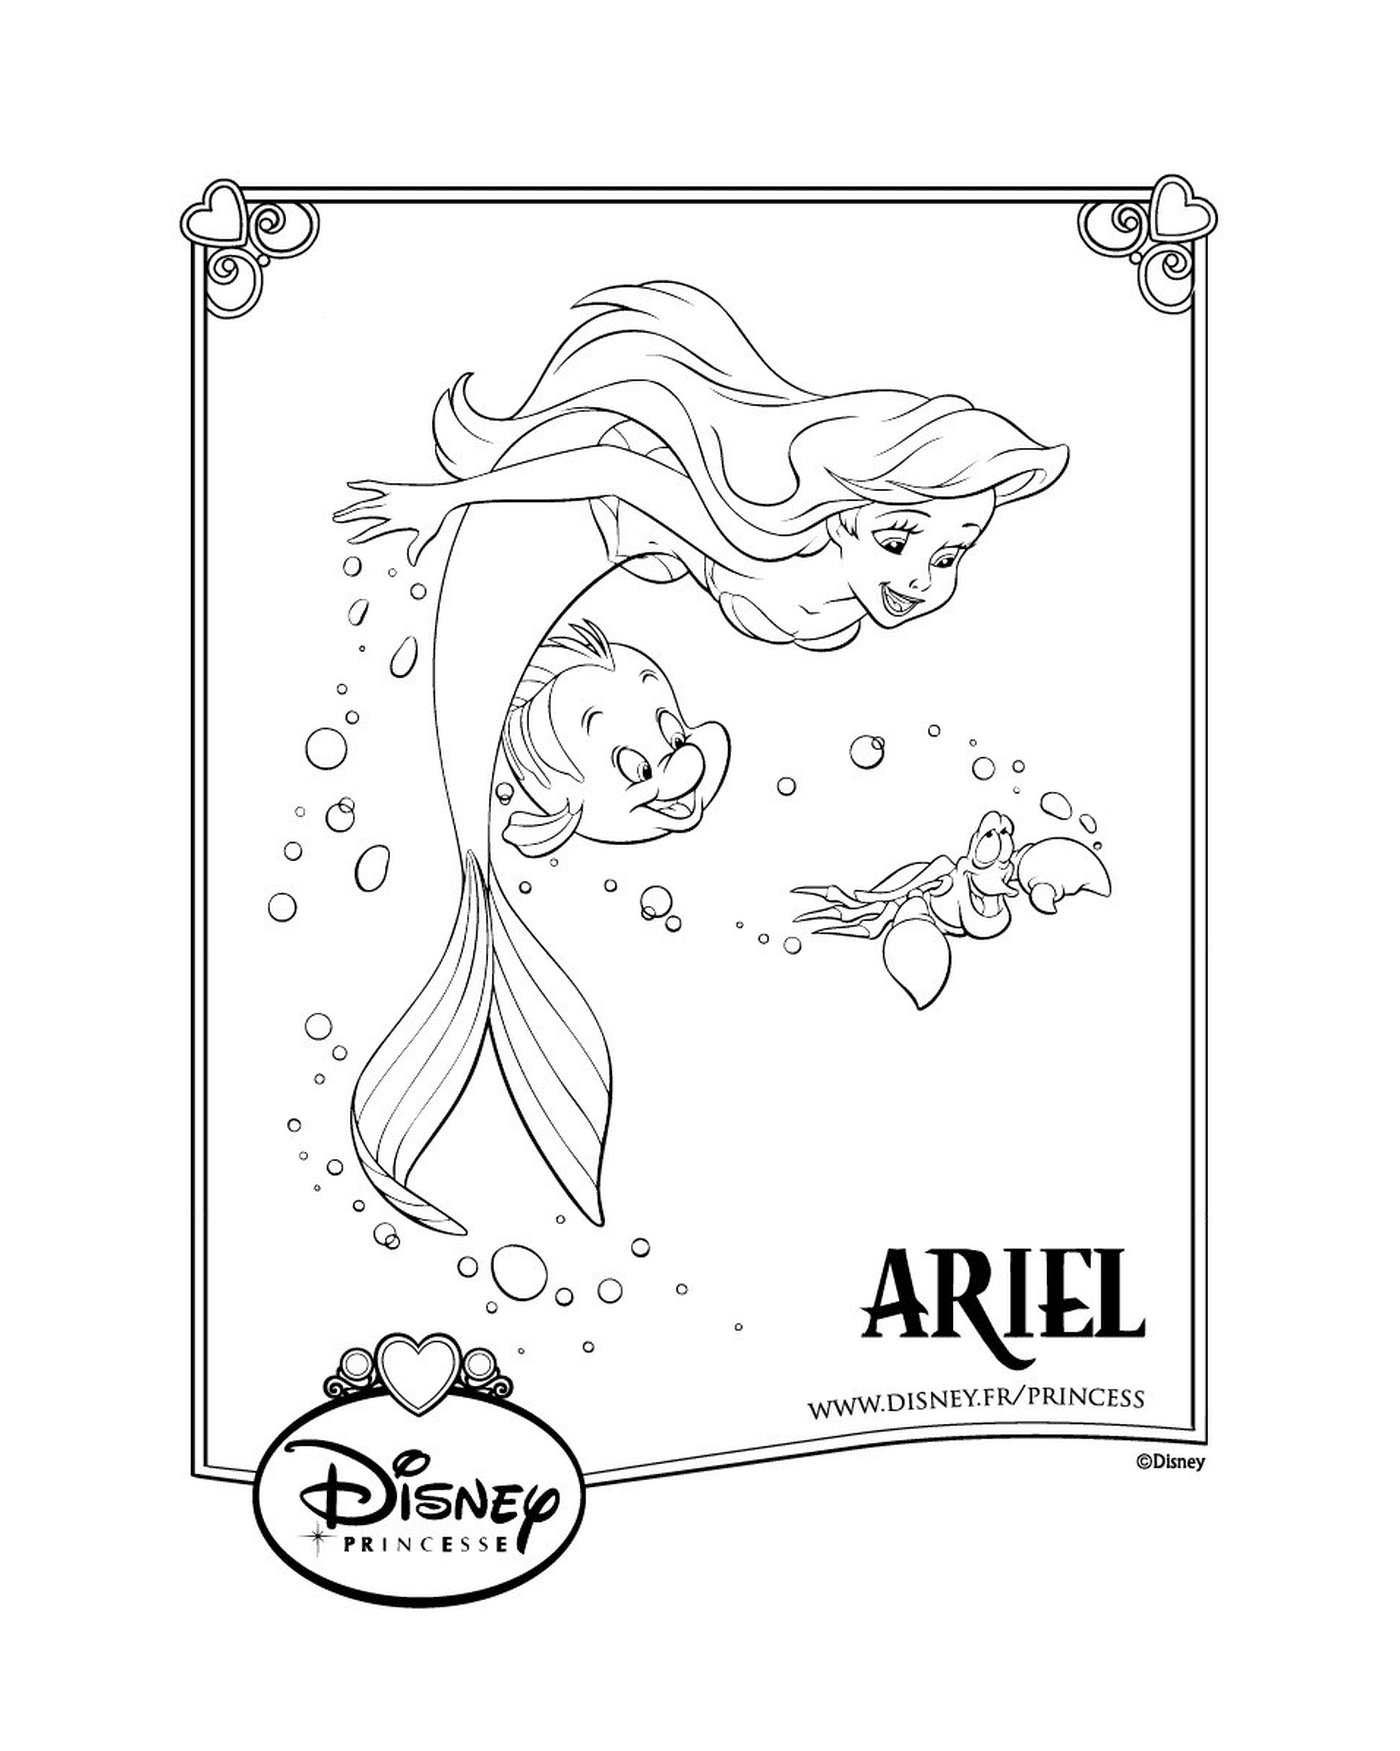  Ariel, a pequena sereia da Disney, princesa 